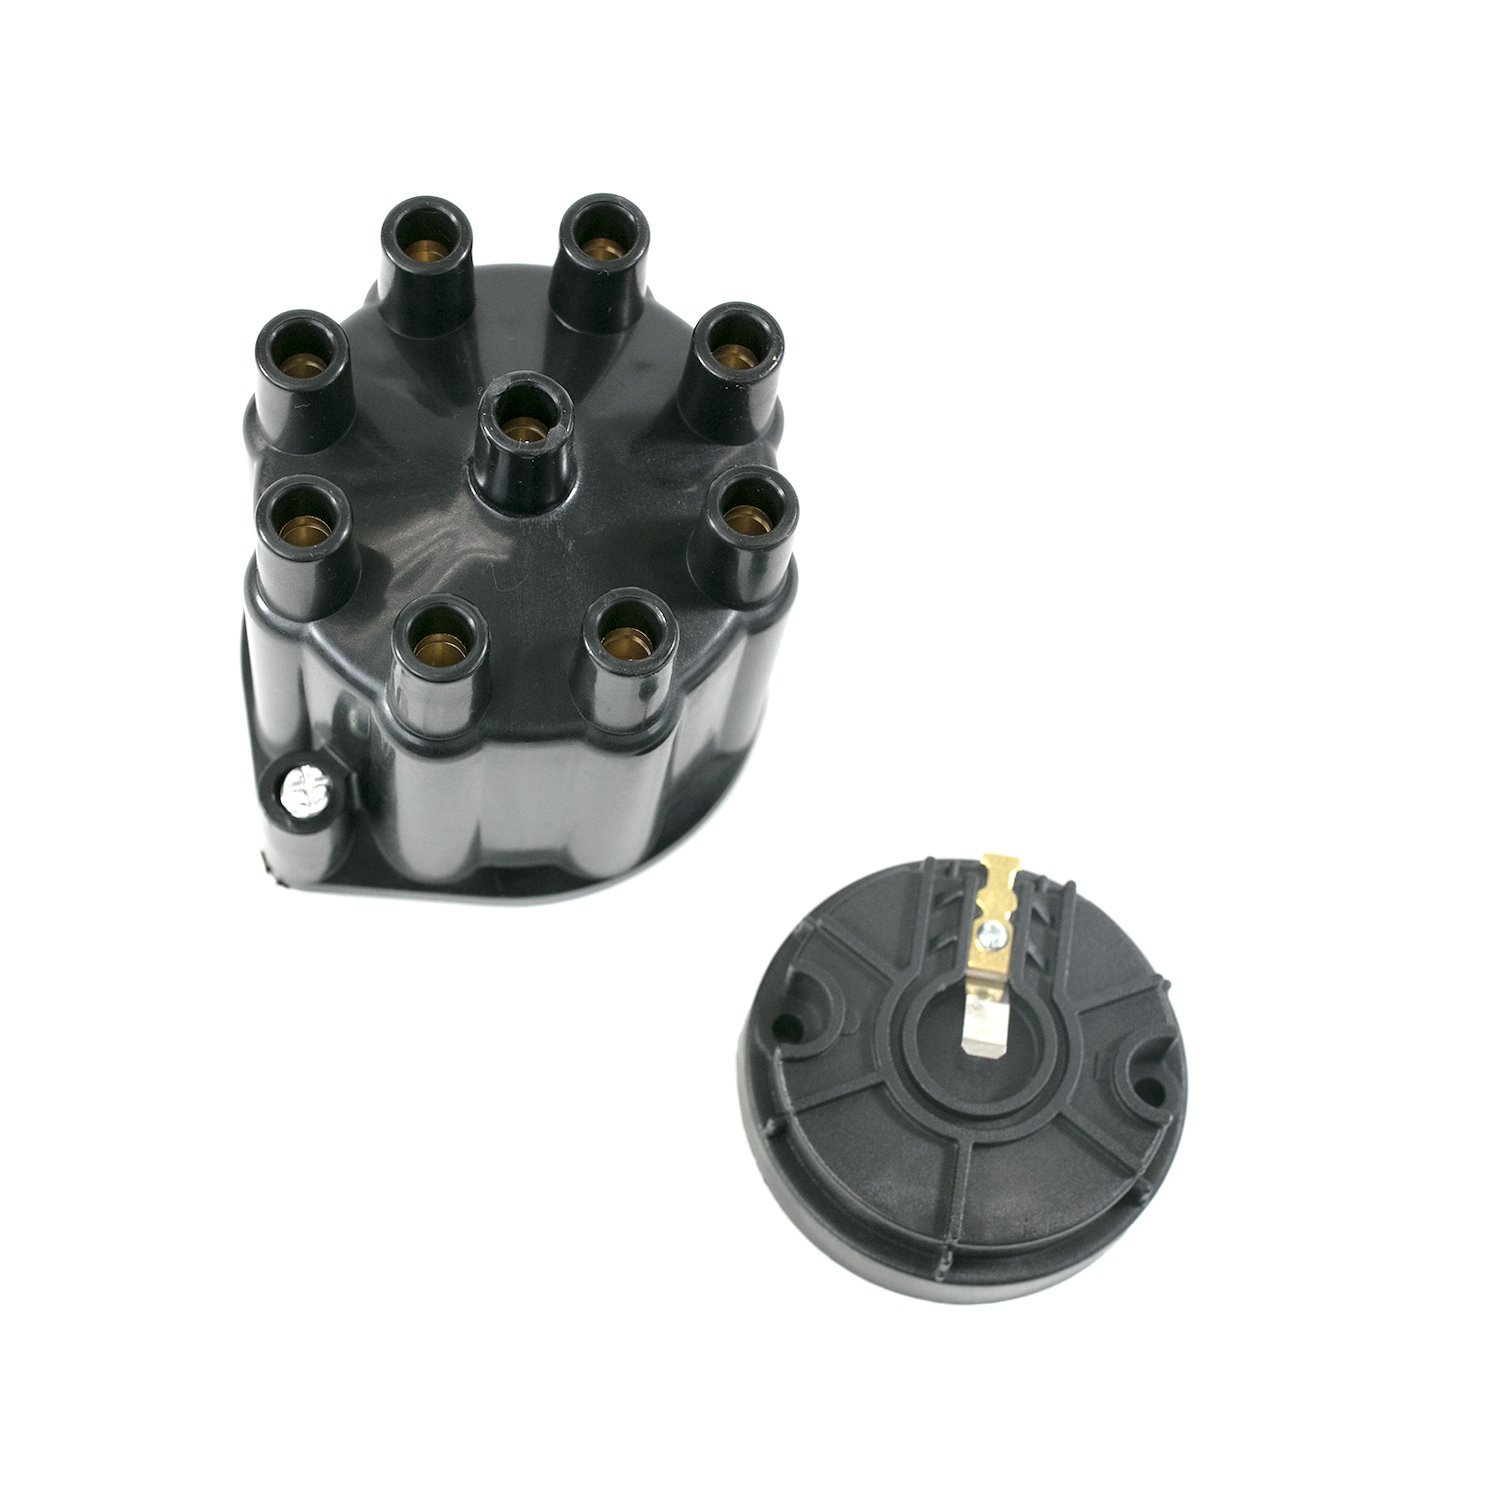 JM6974BK Pro Series Distributor Cap and Rotor Kit, 8 Cylinder Female, Black